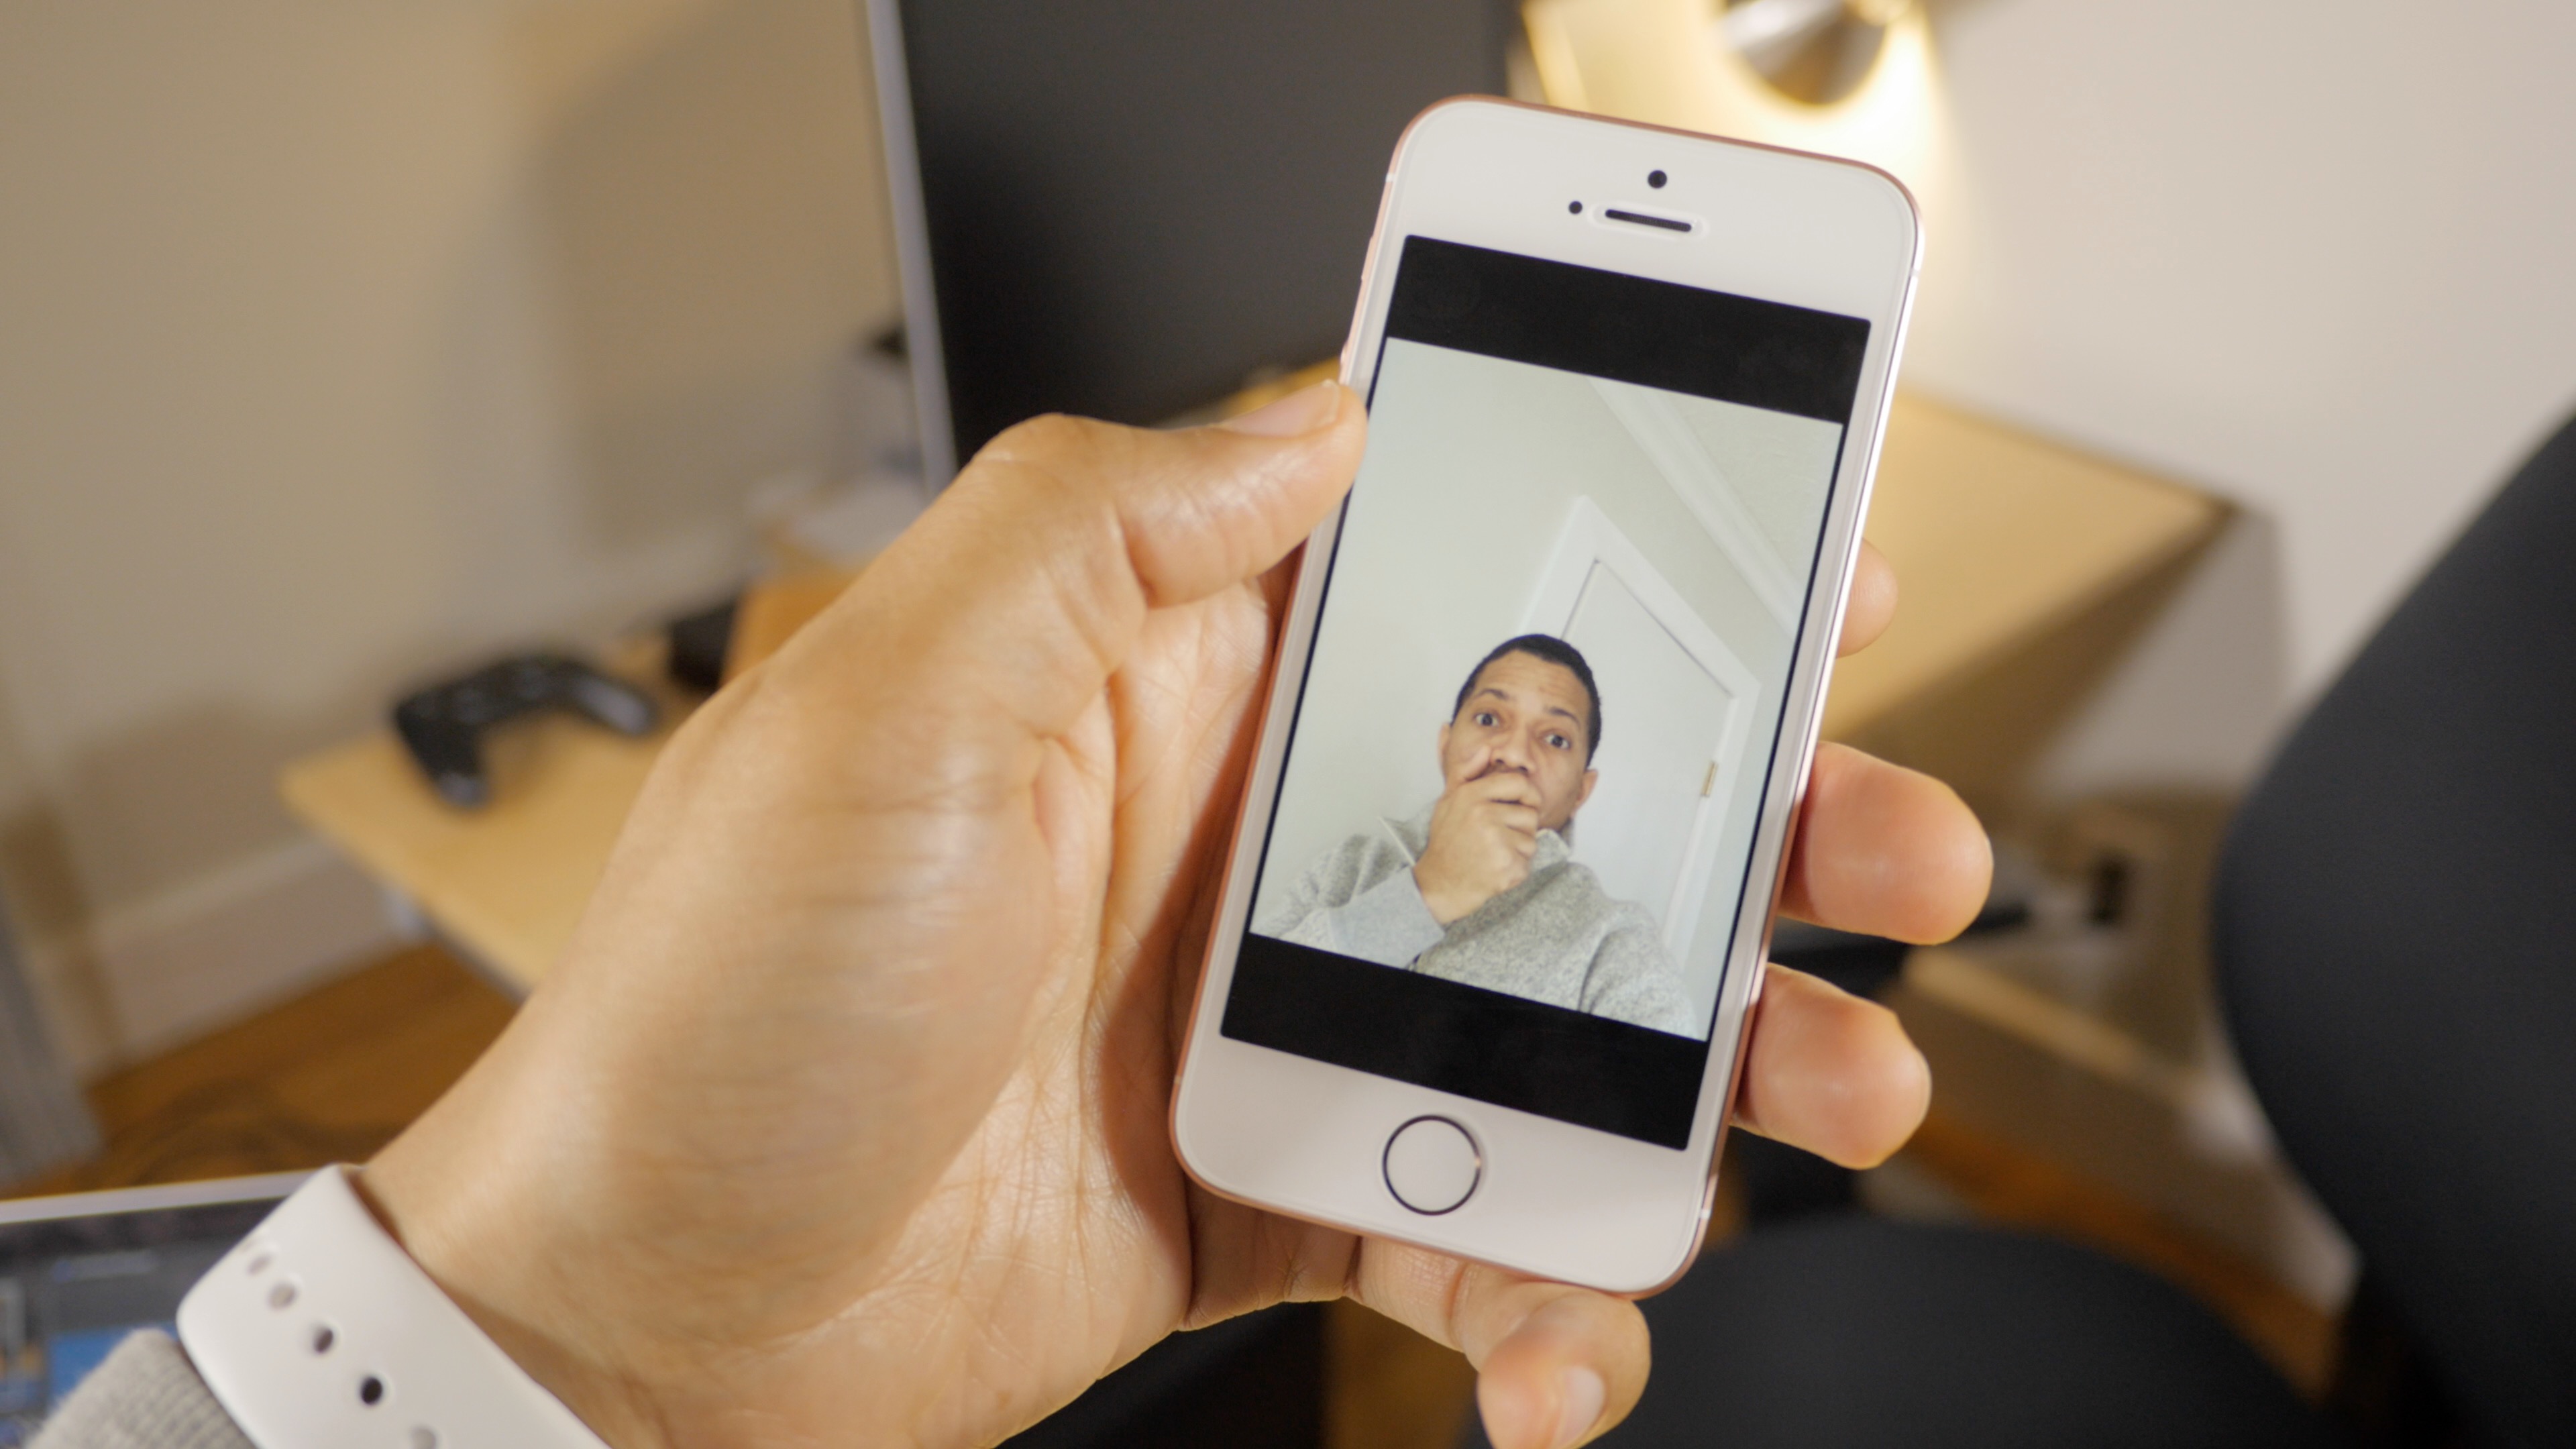 iPhone SE FaceTime Camera 1.2-megapixel